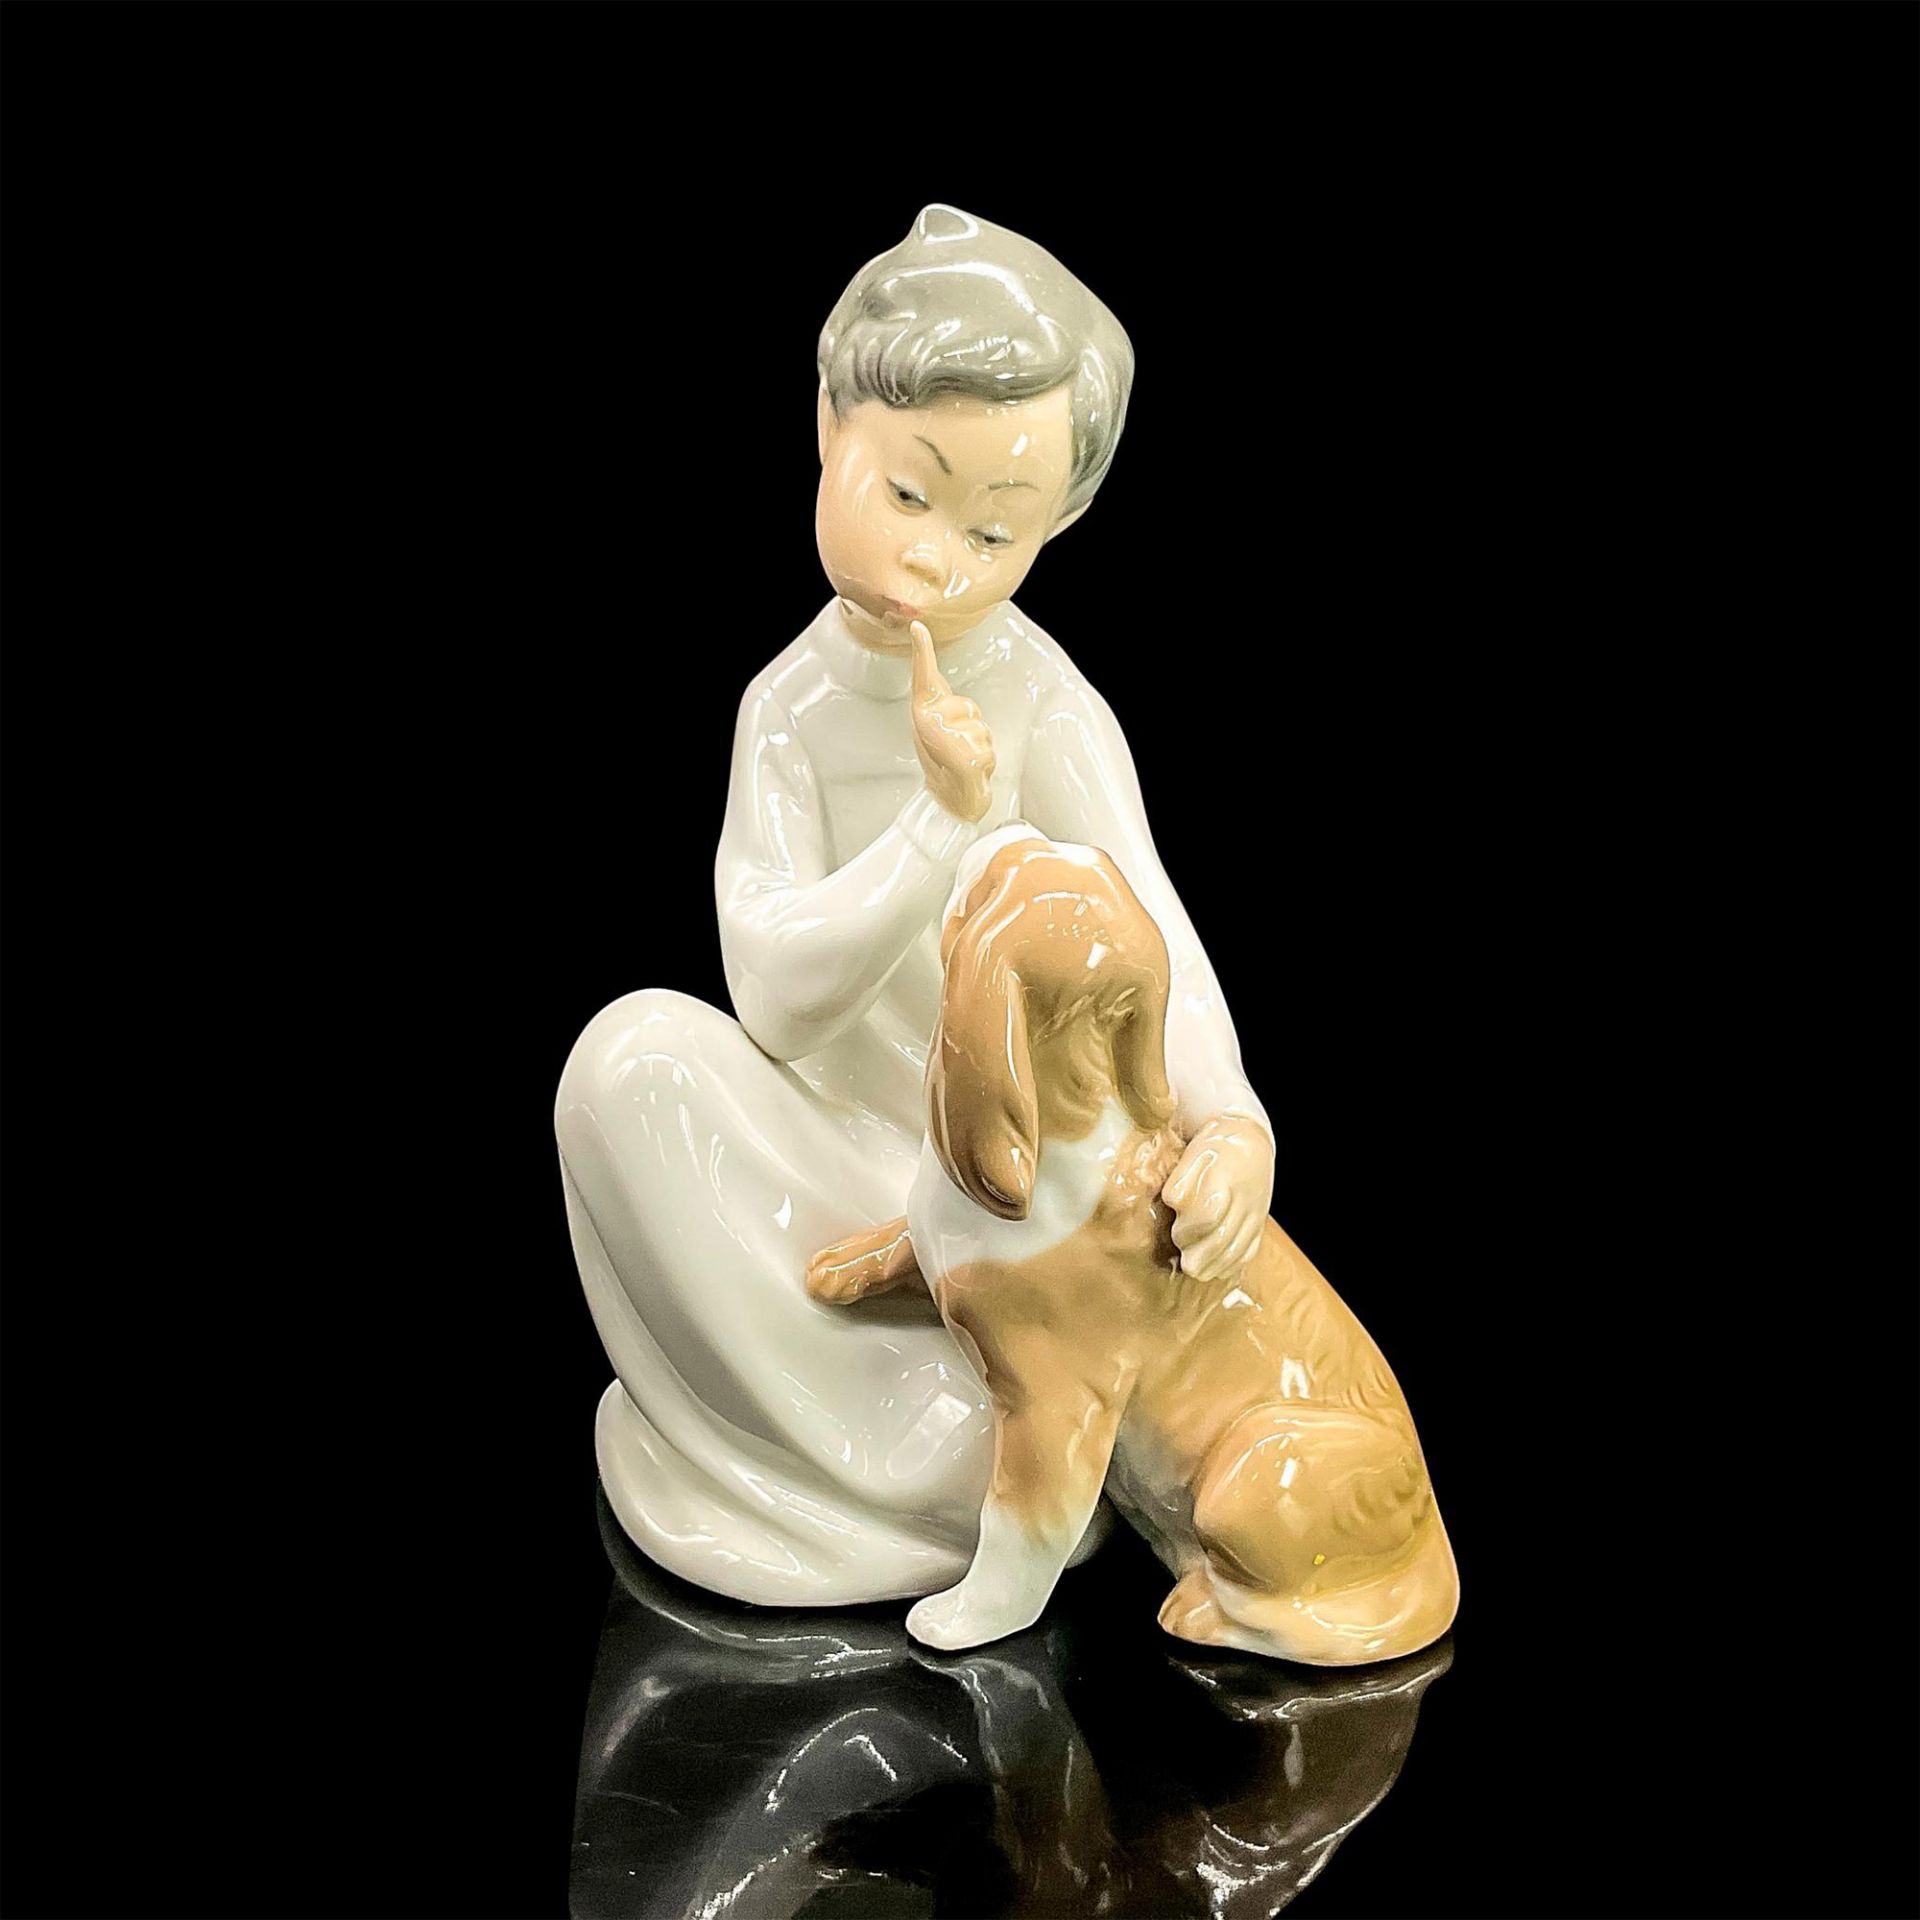 Boy With Dog 1004522 - Lladro Porcelain Figurine